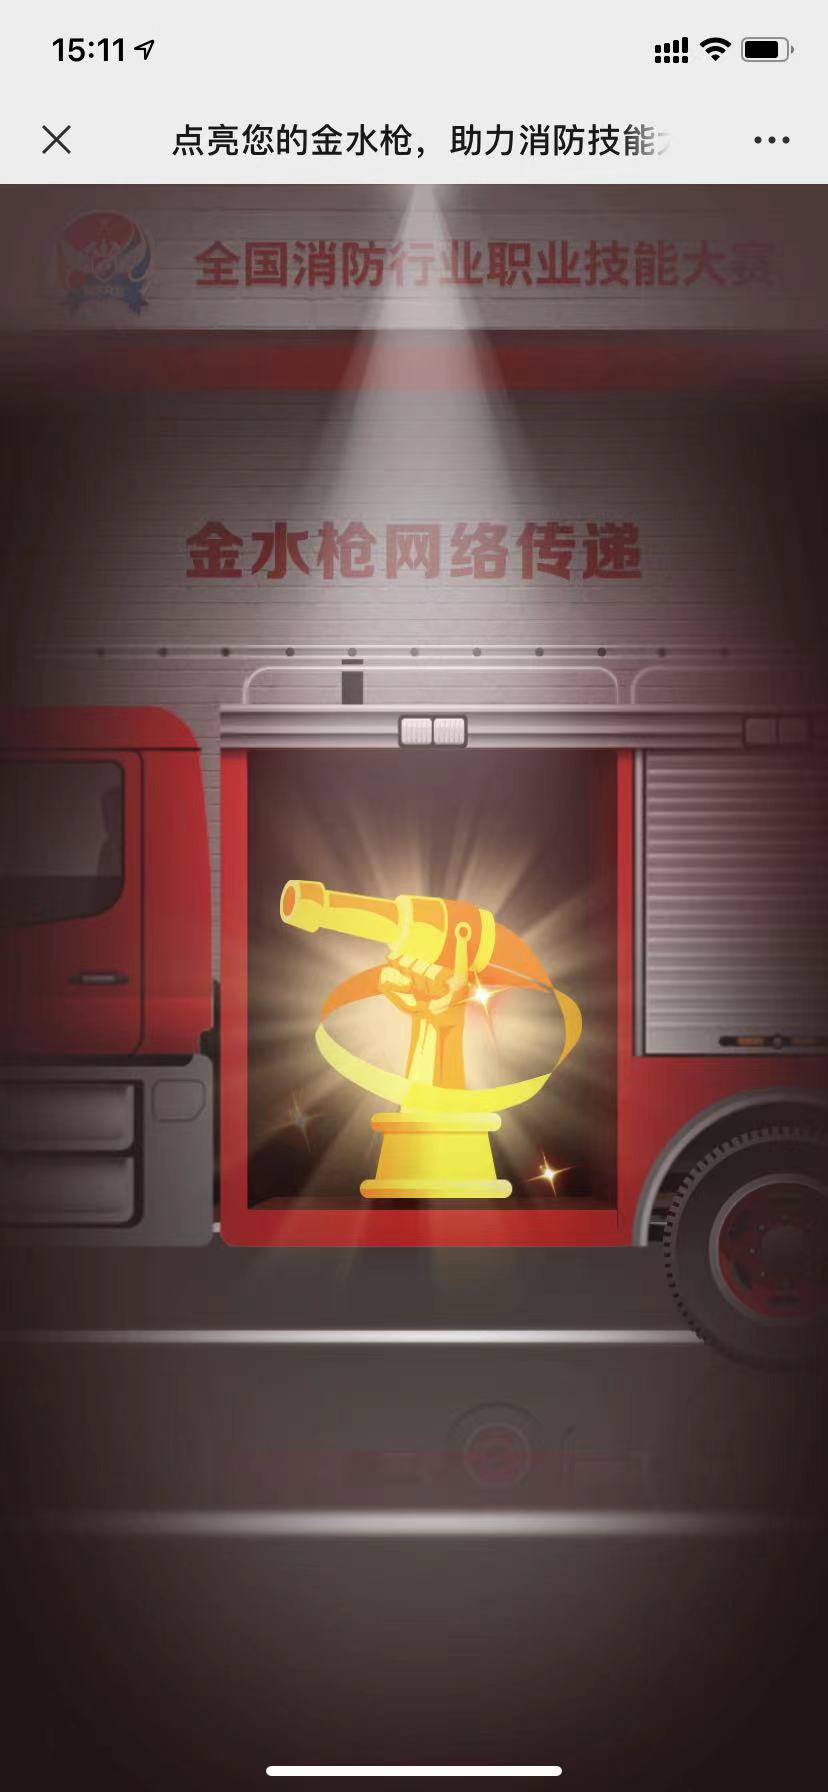  H5开发|全国消防行业职业技能大赛